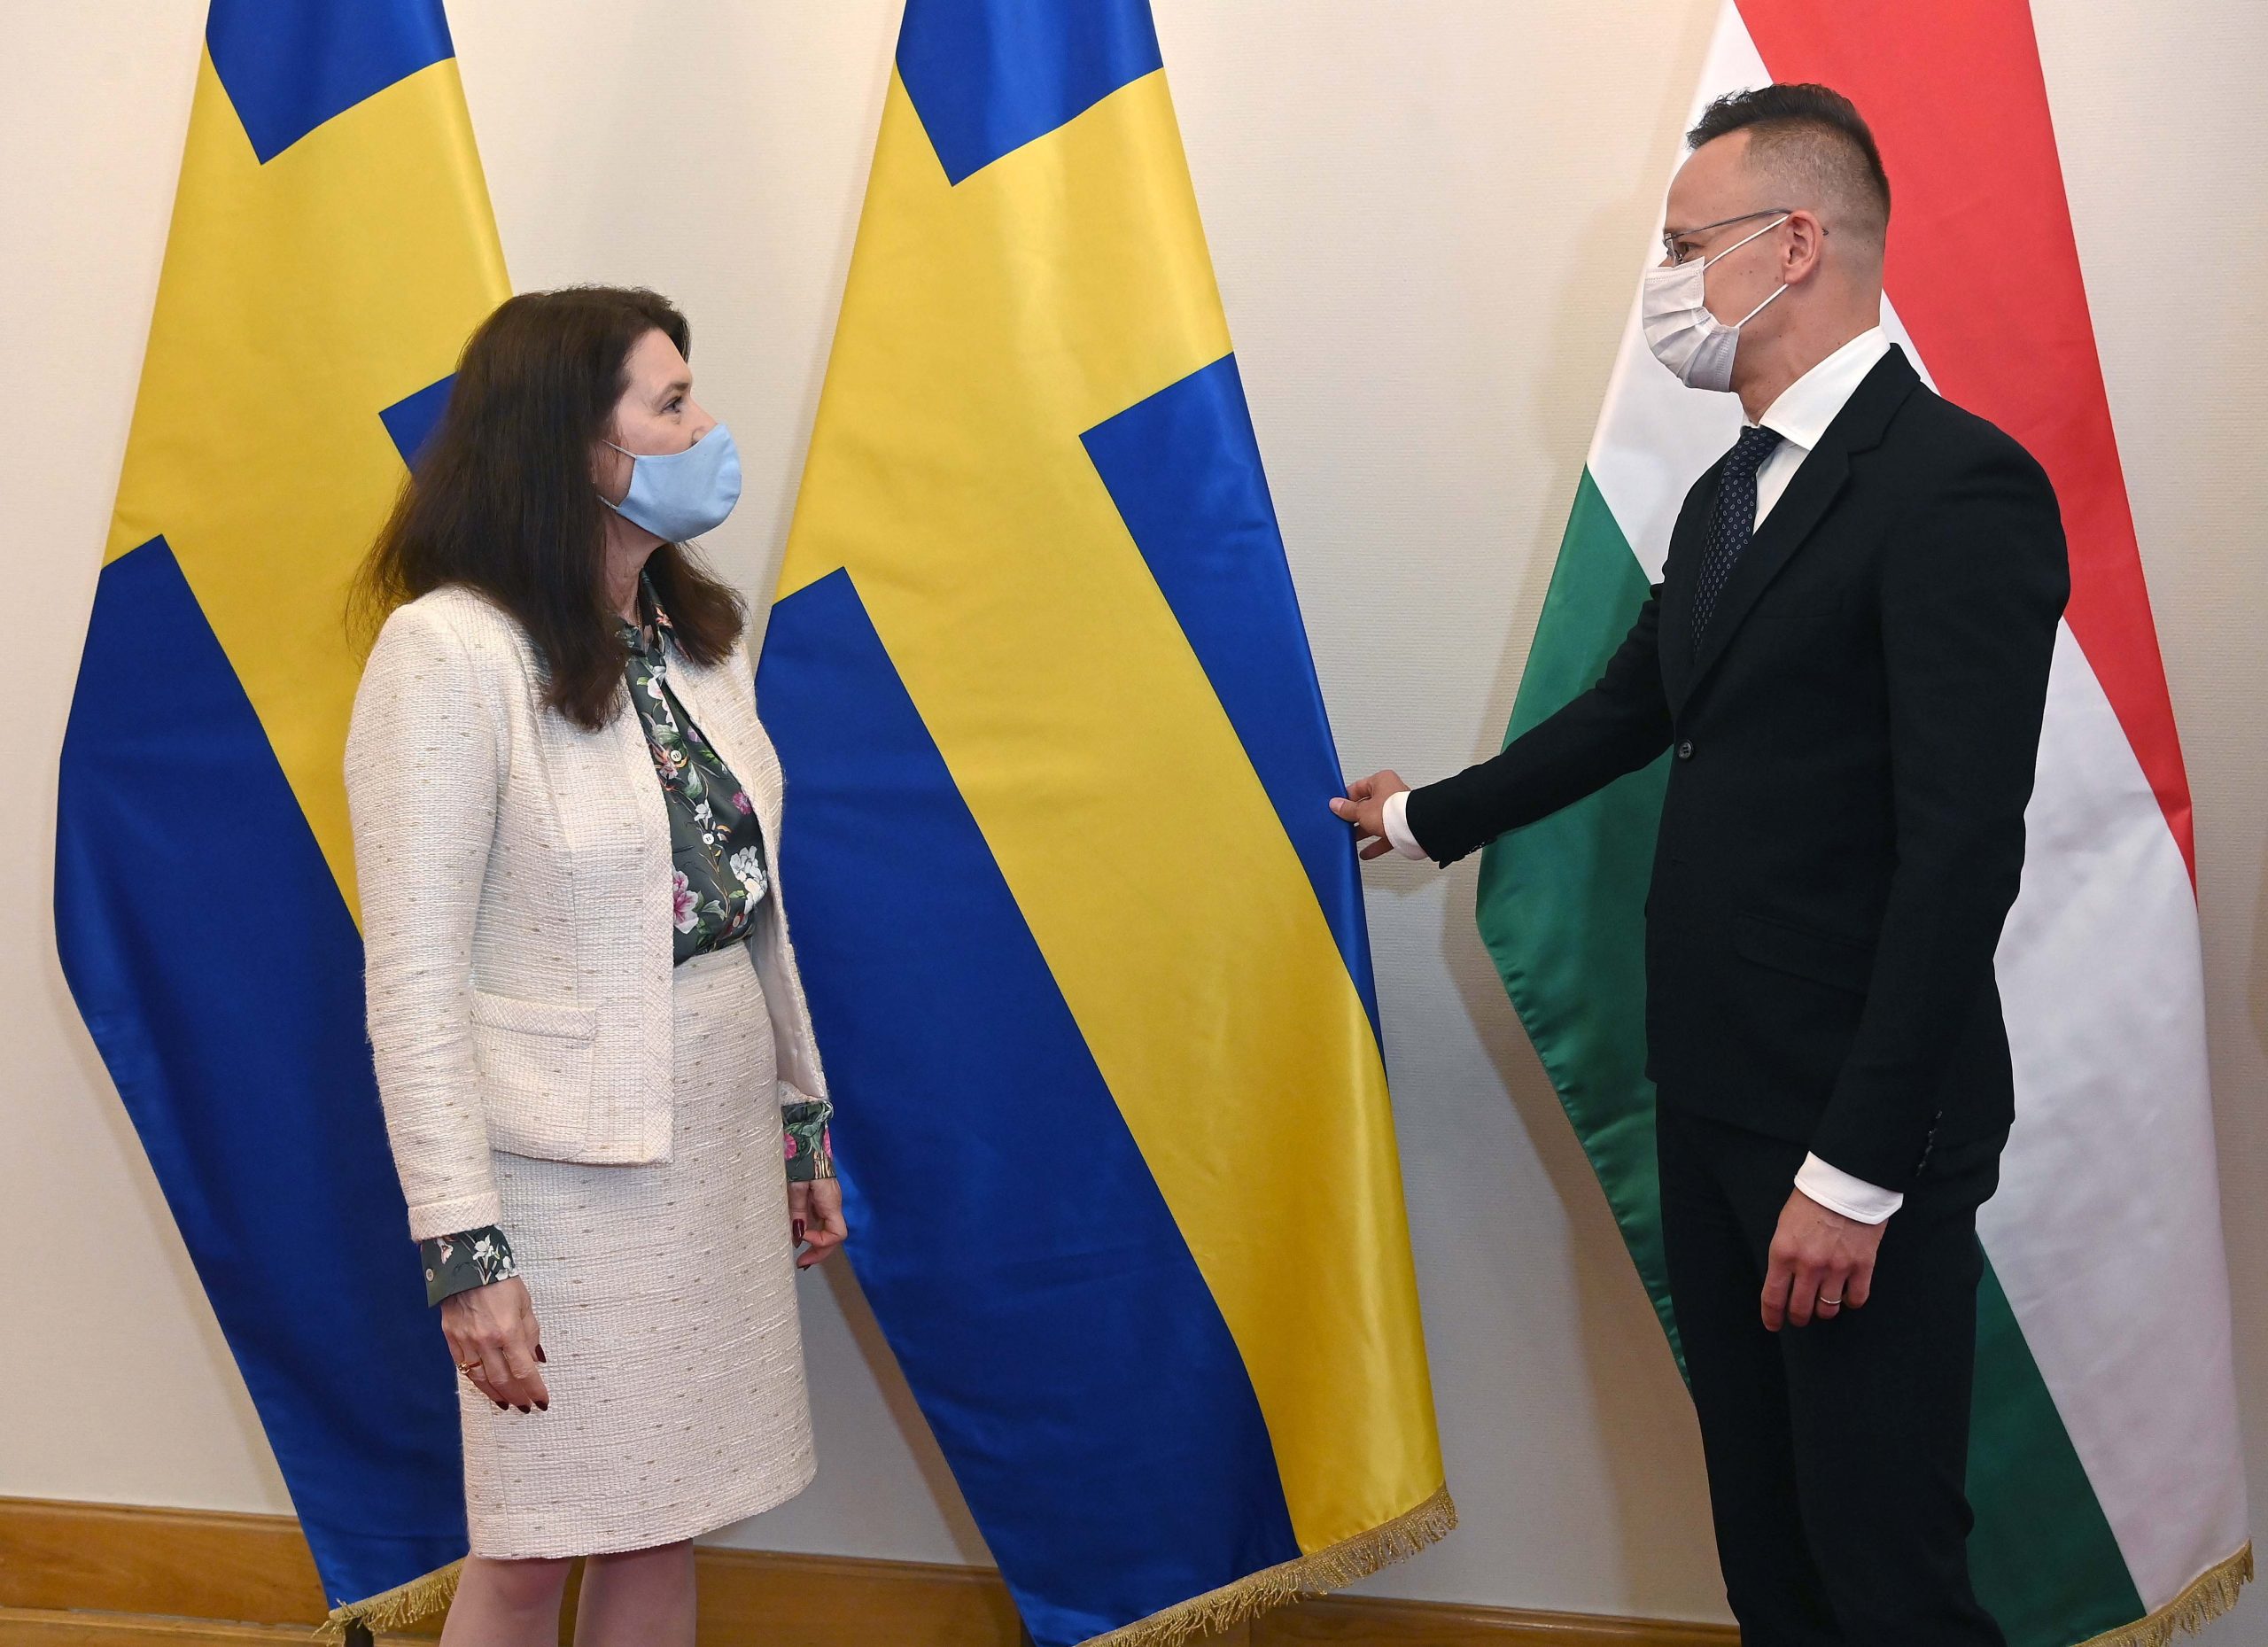 FM Szijjártó: Sweden 'Ally of Hungary' Despite Disagreement on Certain Issues